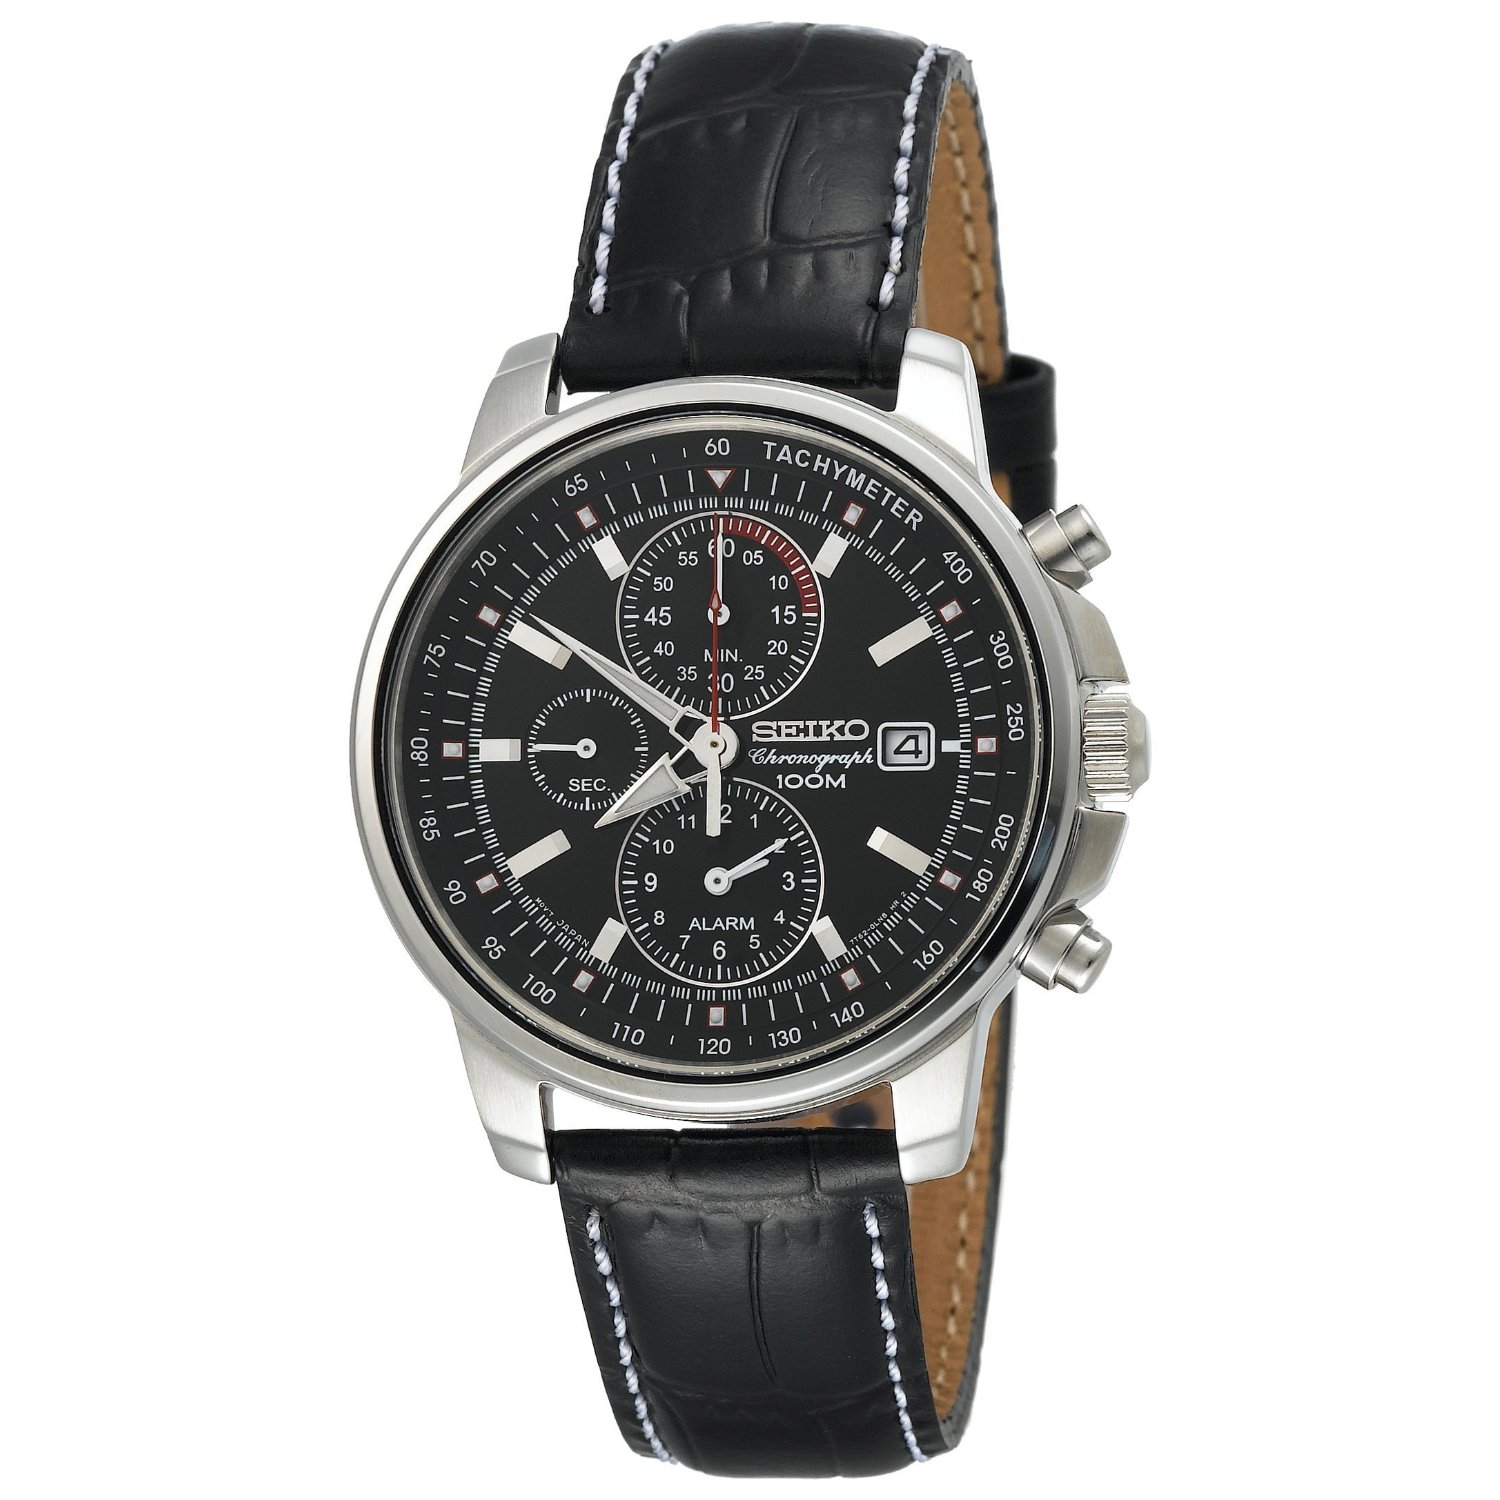 Seiko Men's SNAB65 Alarm Chronograph Leather Strap Watch